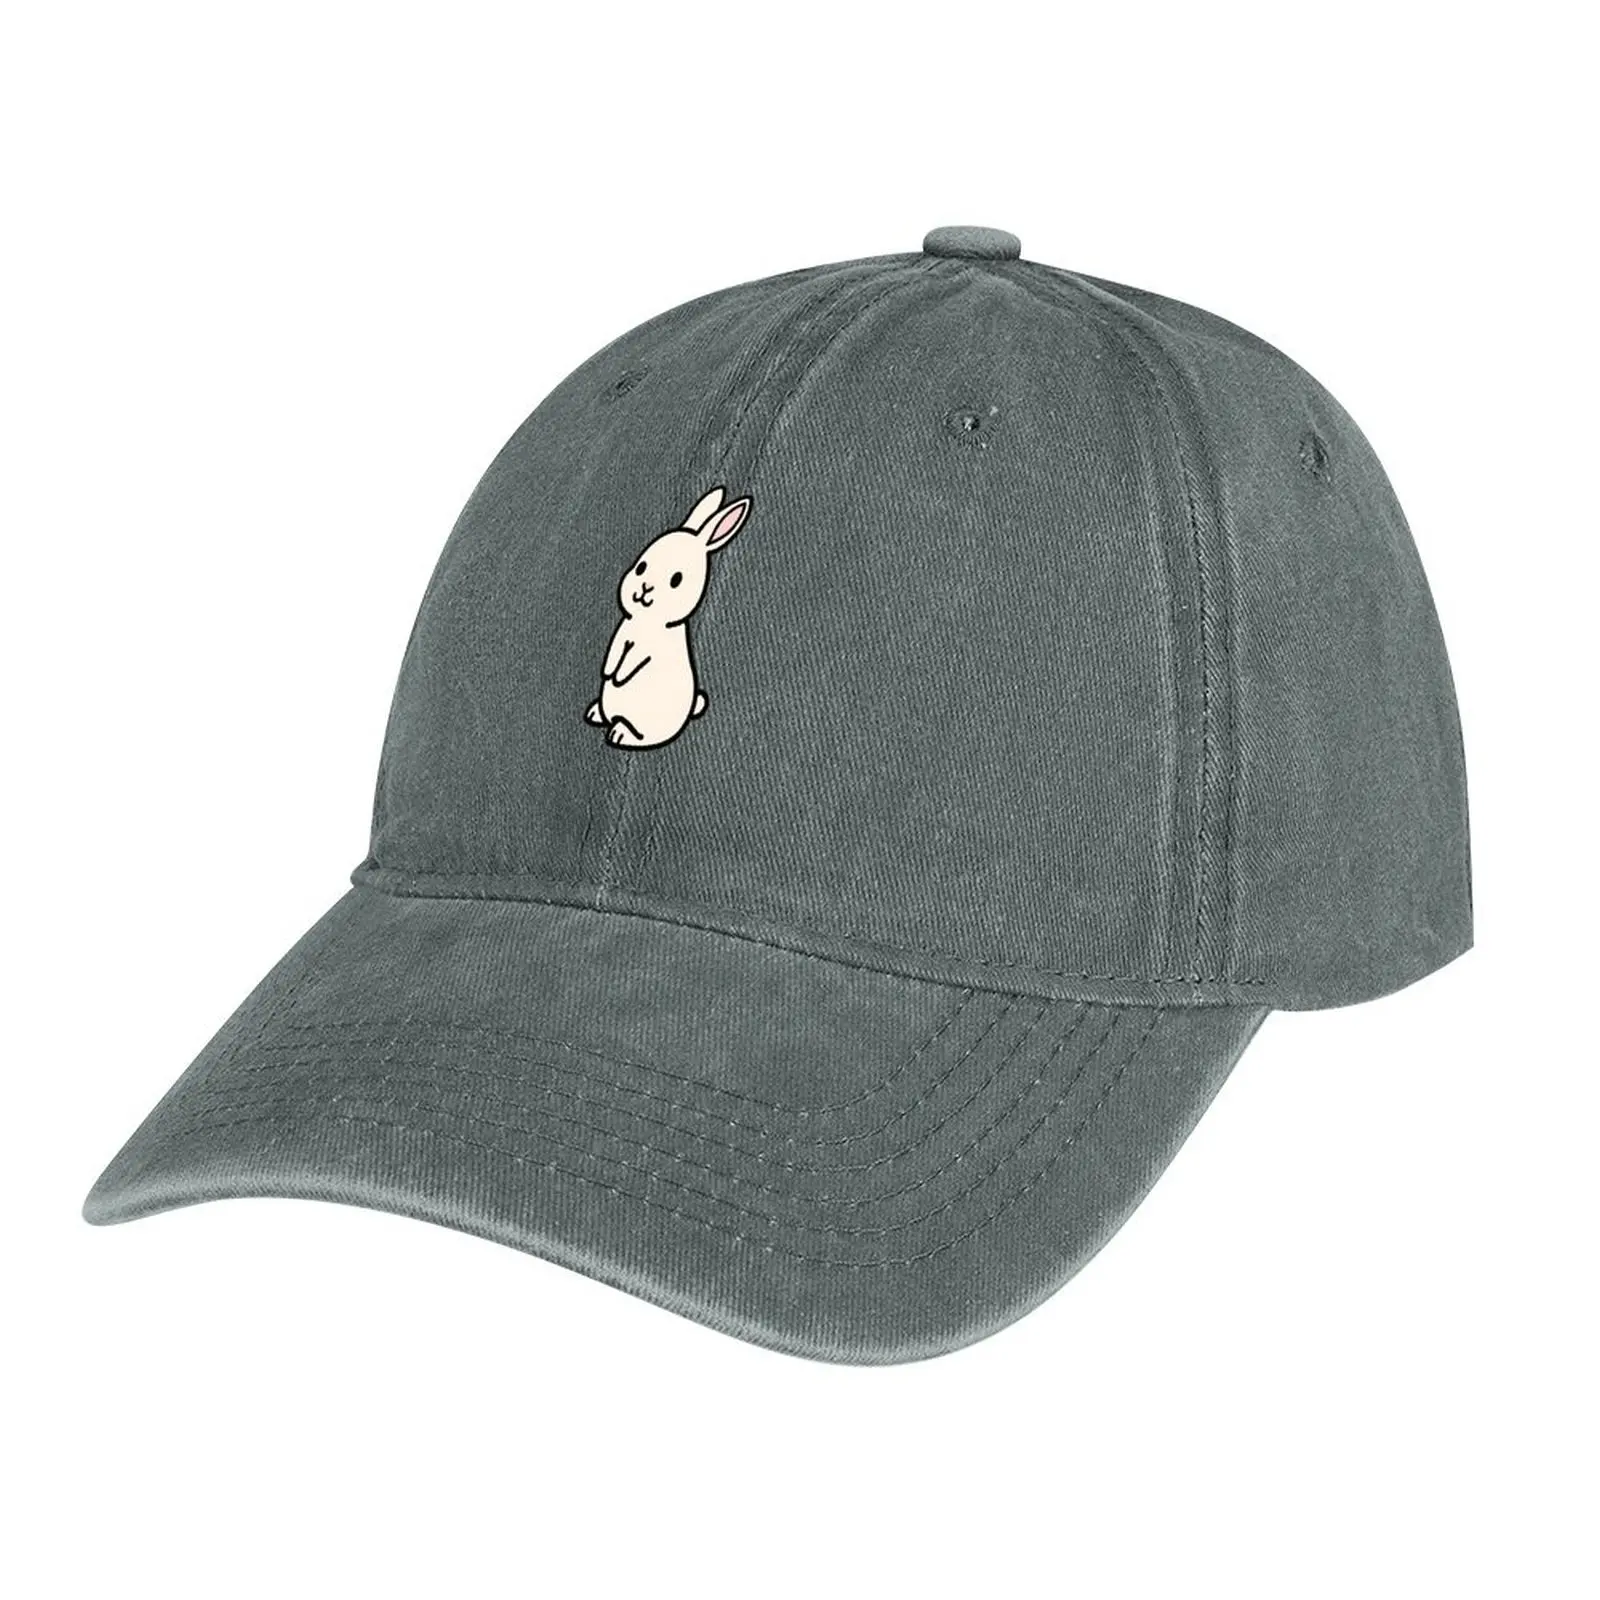 

White Bunny Cowboy Hat Trucker Cap Sunhat funny hat Men's Baseball Women's